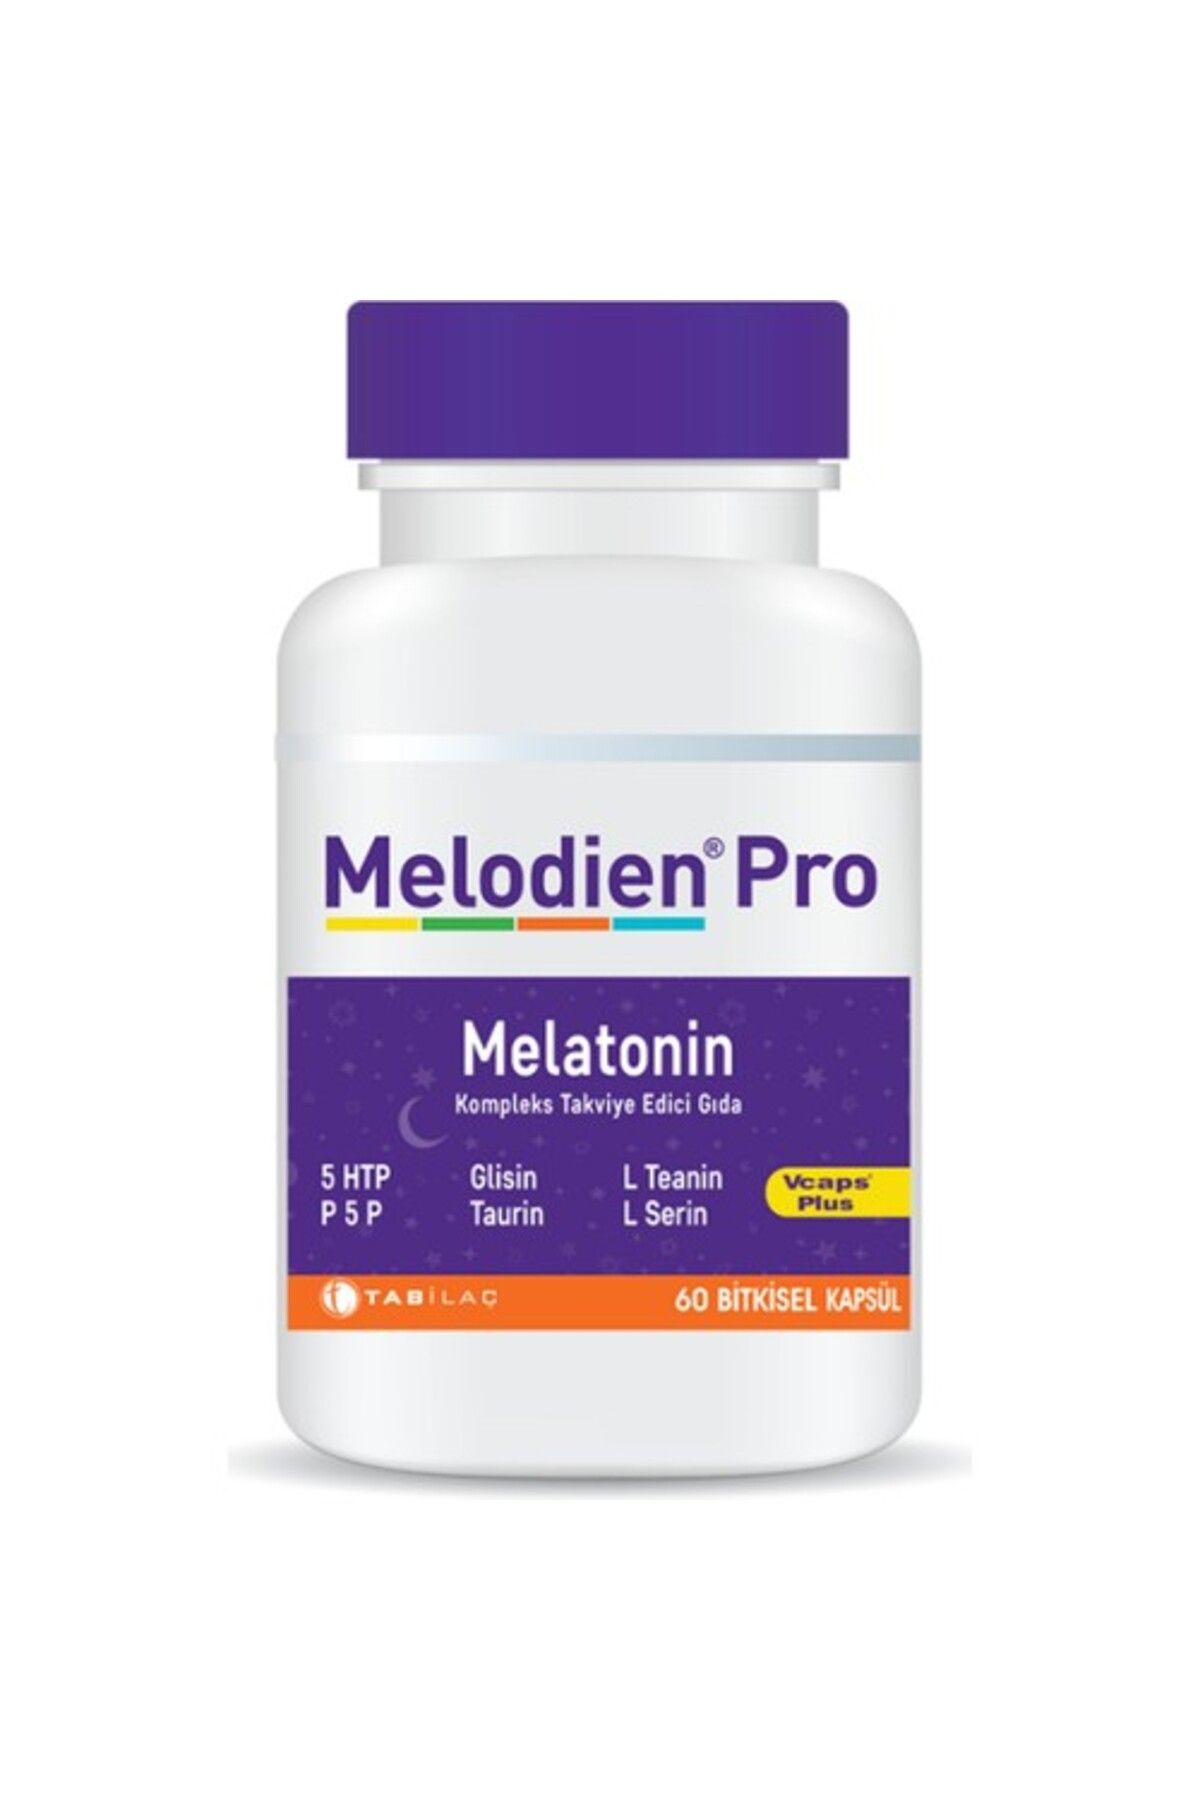 Tab Pro Melatonin 60 Kapsül – 3 Mg Melatonin